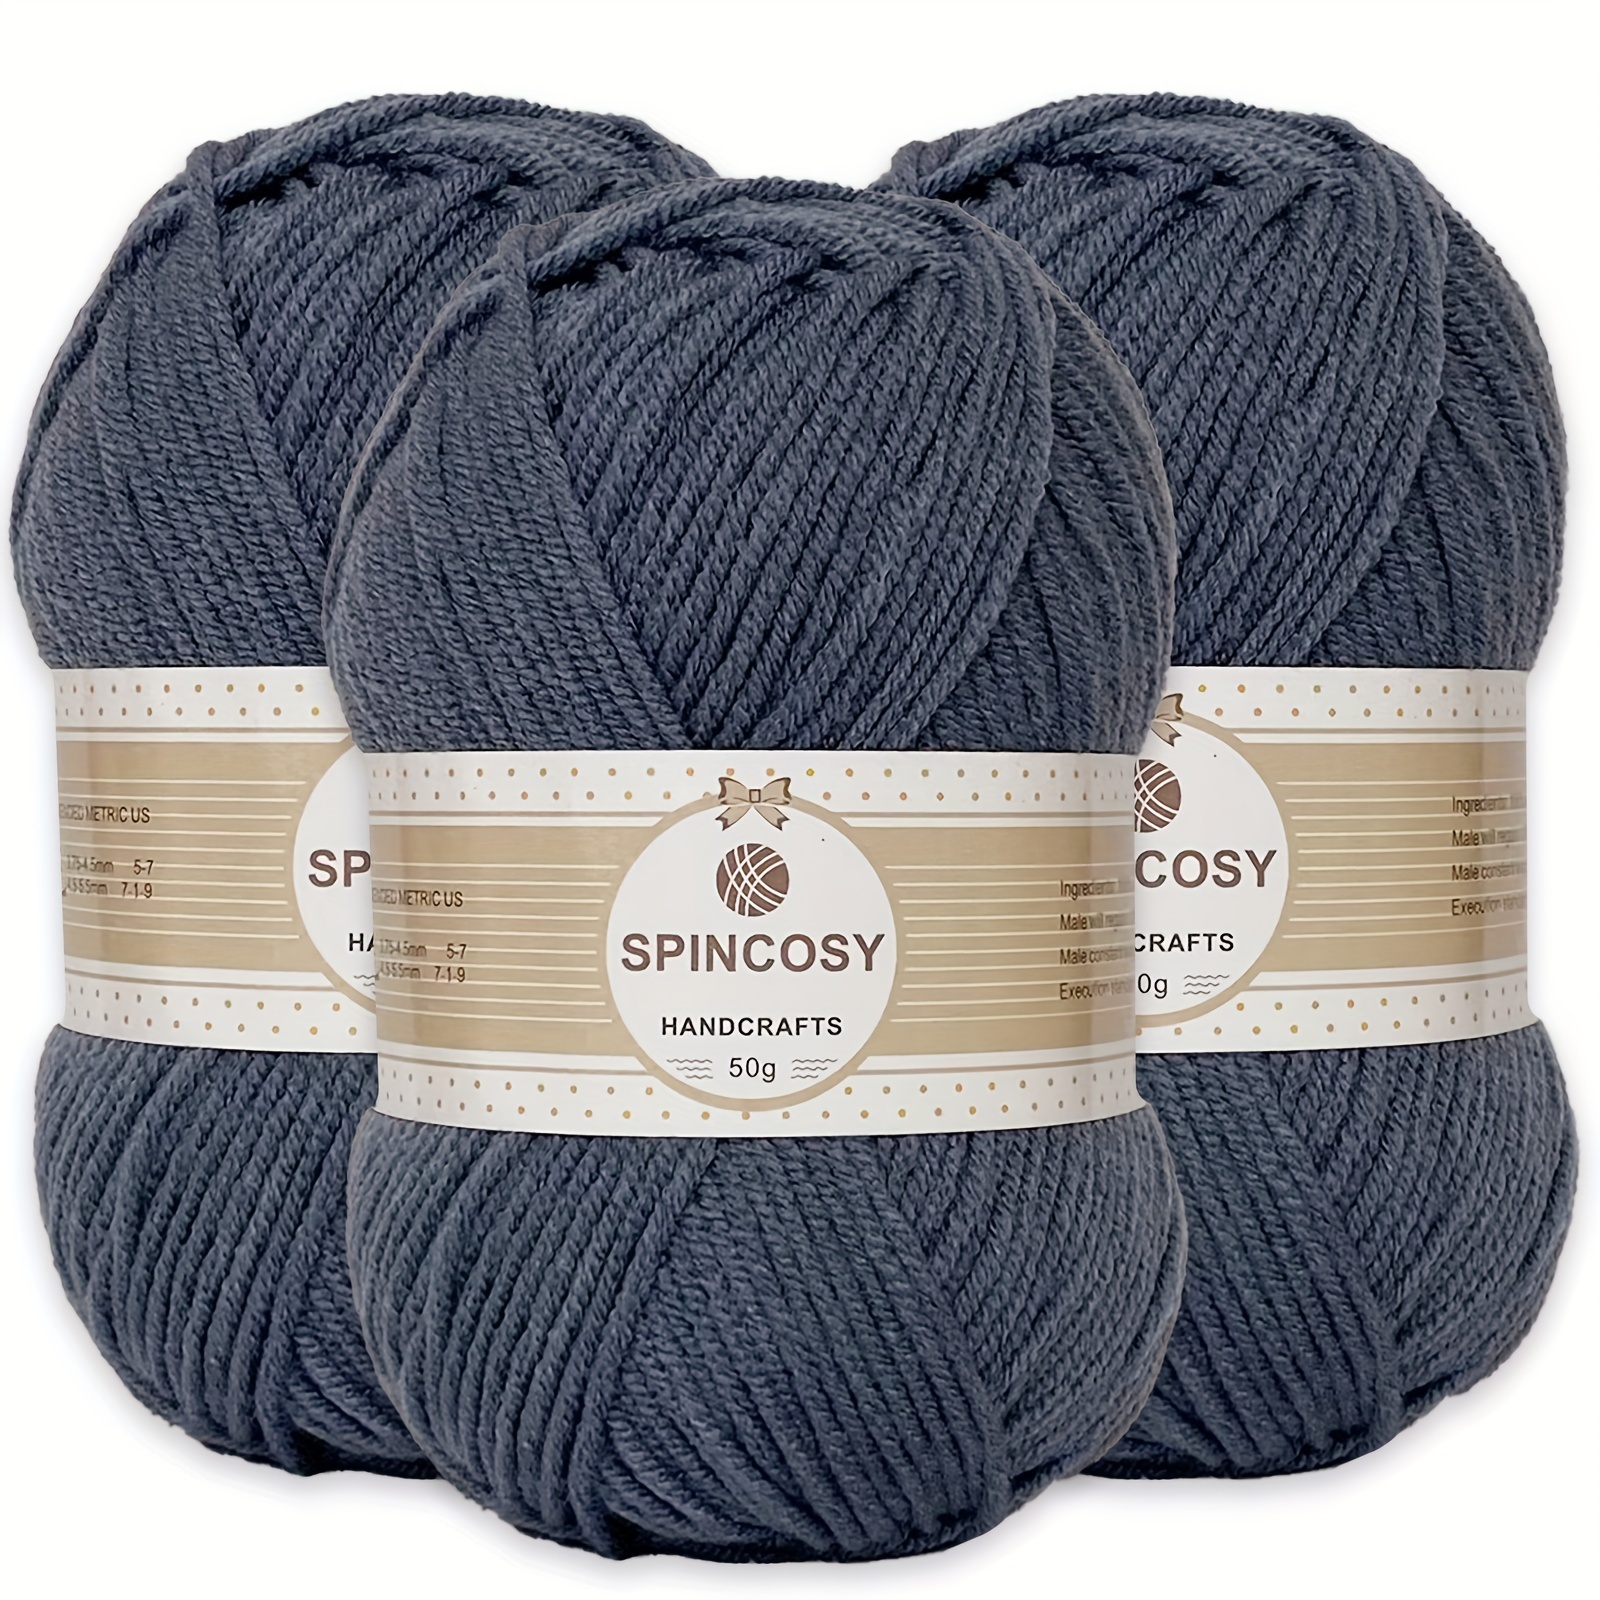 2 Skeins Soft Crochet Yarn, 100g 280 Yards Assorted Colors 4ply Acrylic  Yarn,Yarn for Crochet & Hand Knitting by spincosy (Blue)